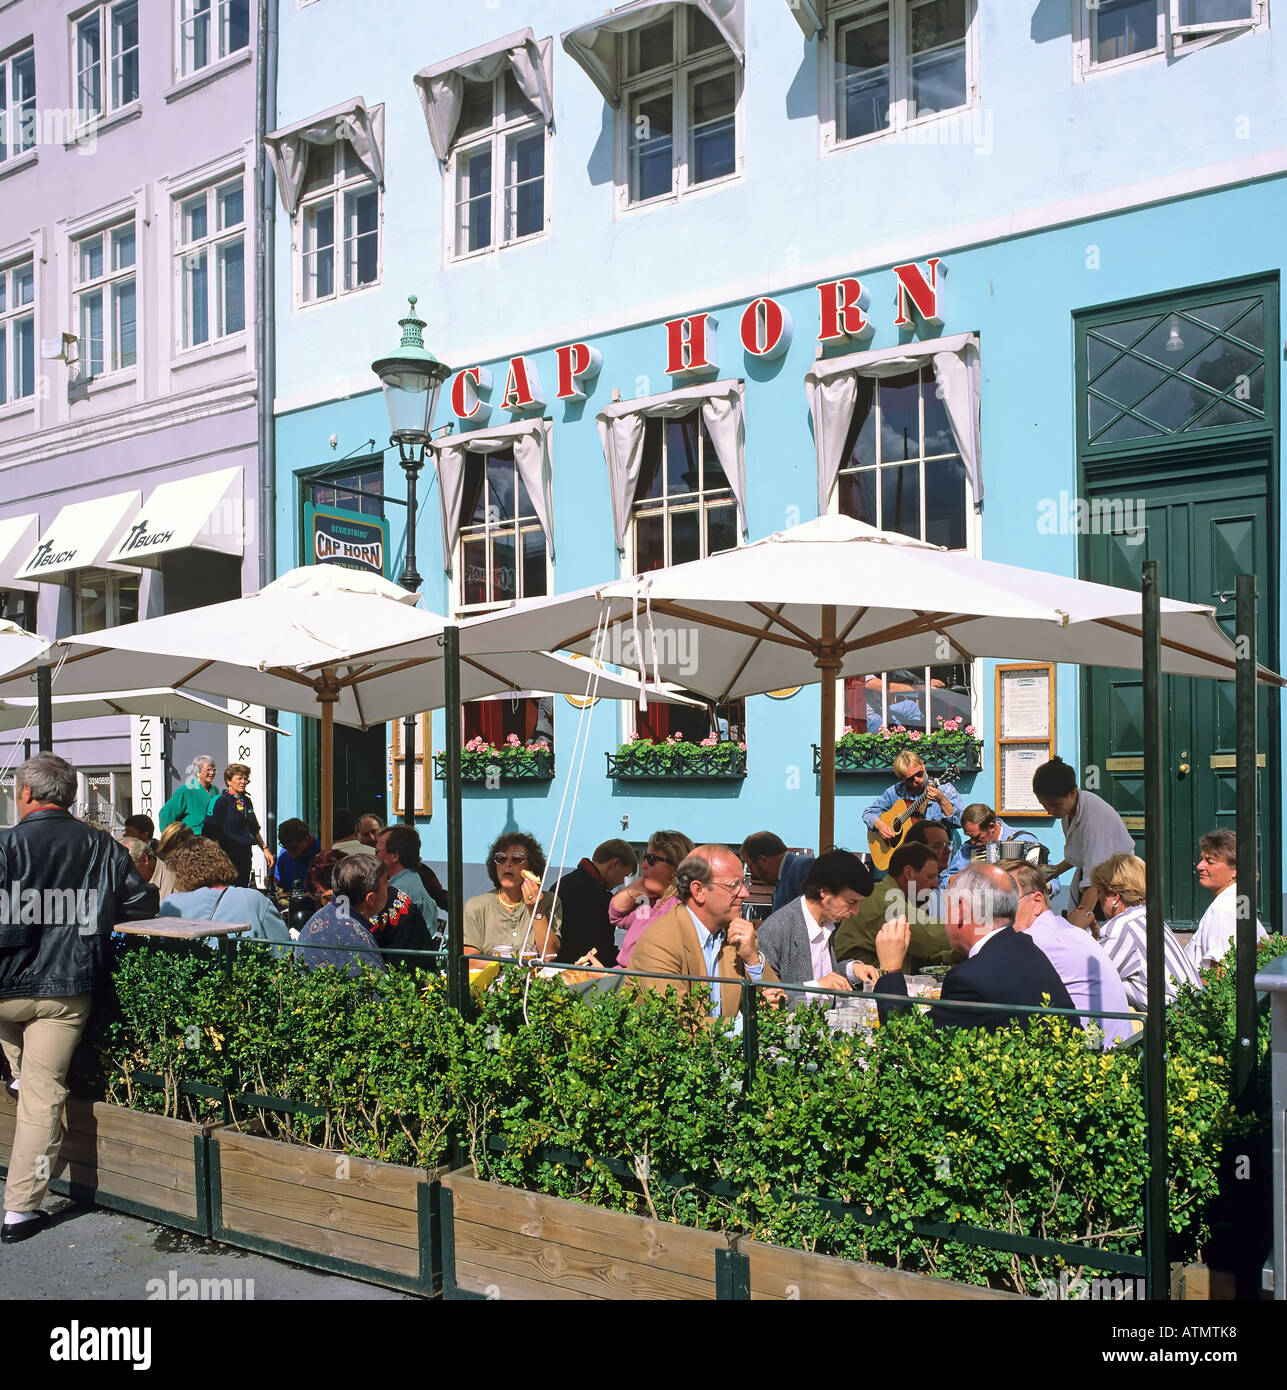 Cap Horn" de Quayside terraza restaurante alfresco, Nyhavn, Copenhague,  Dinamarca Fotografía de stock - Alamy